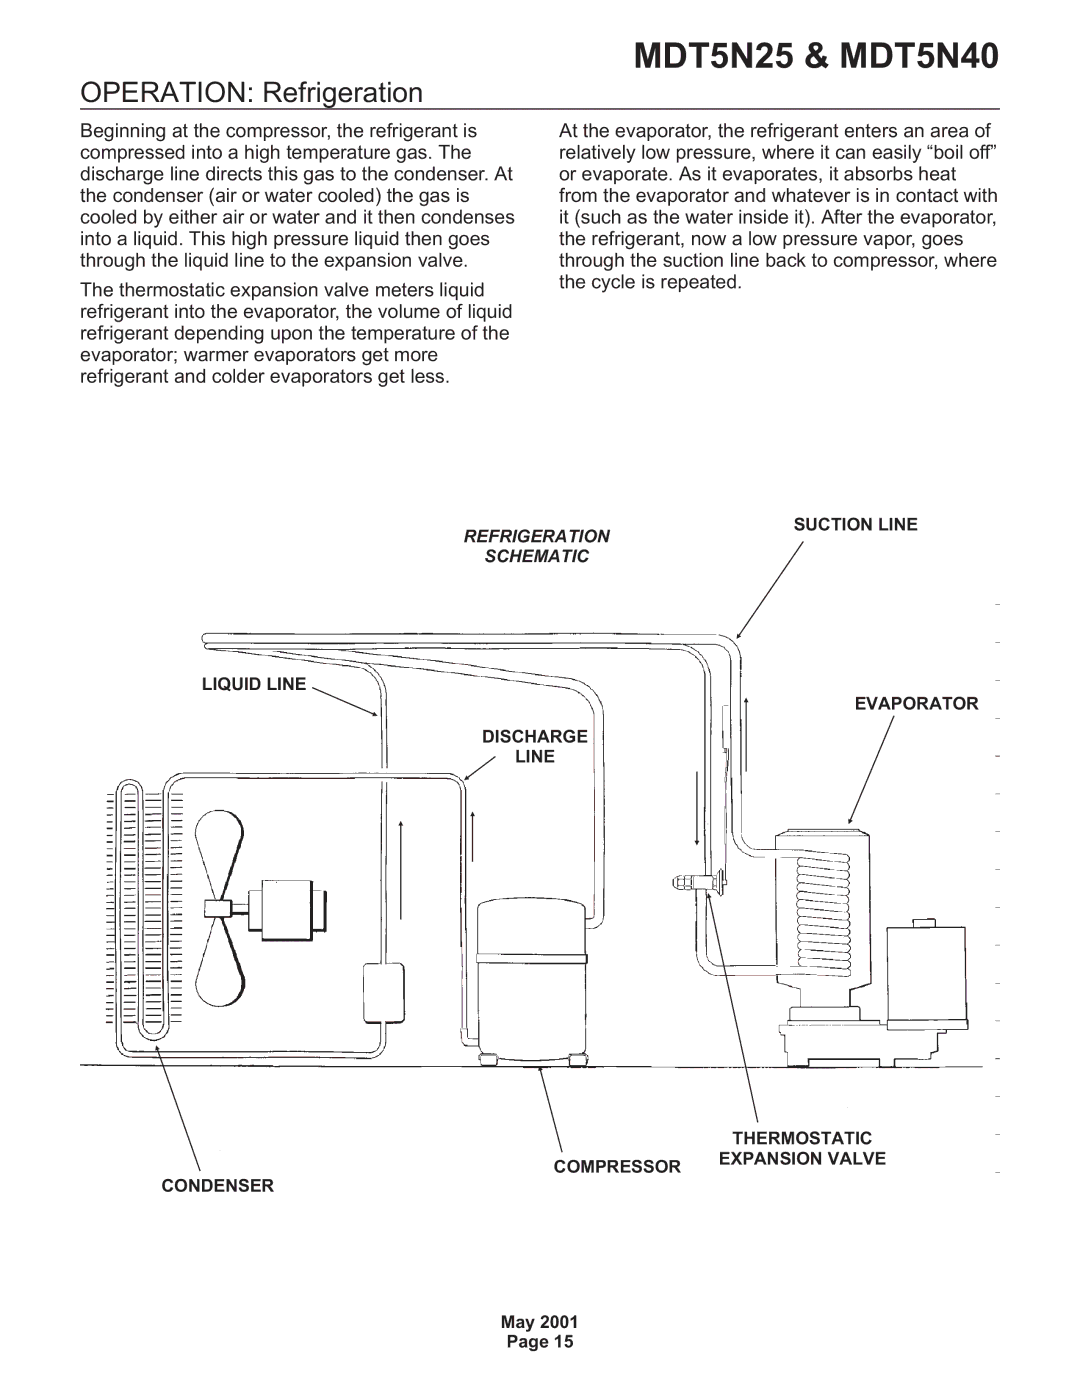 Scotsman Ice MDT5N40, MDT5N25 service manual Operation Refrigeration, Refrigeration Schematic 